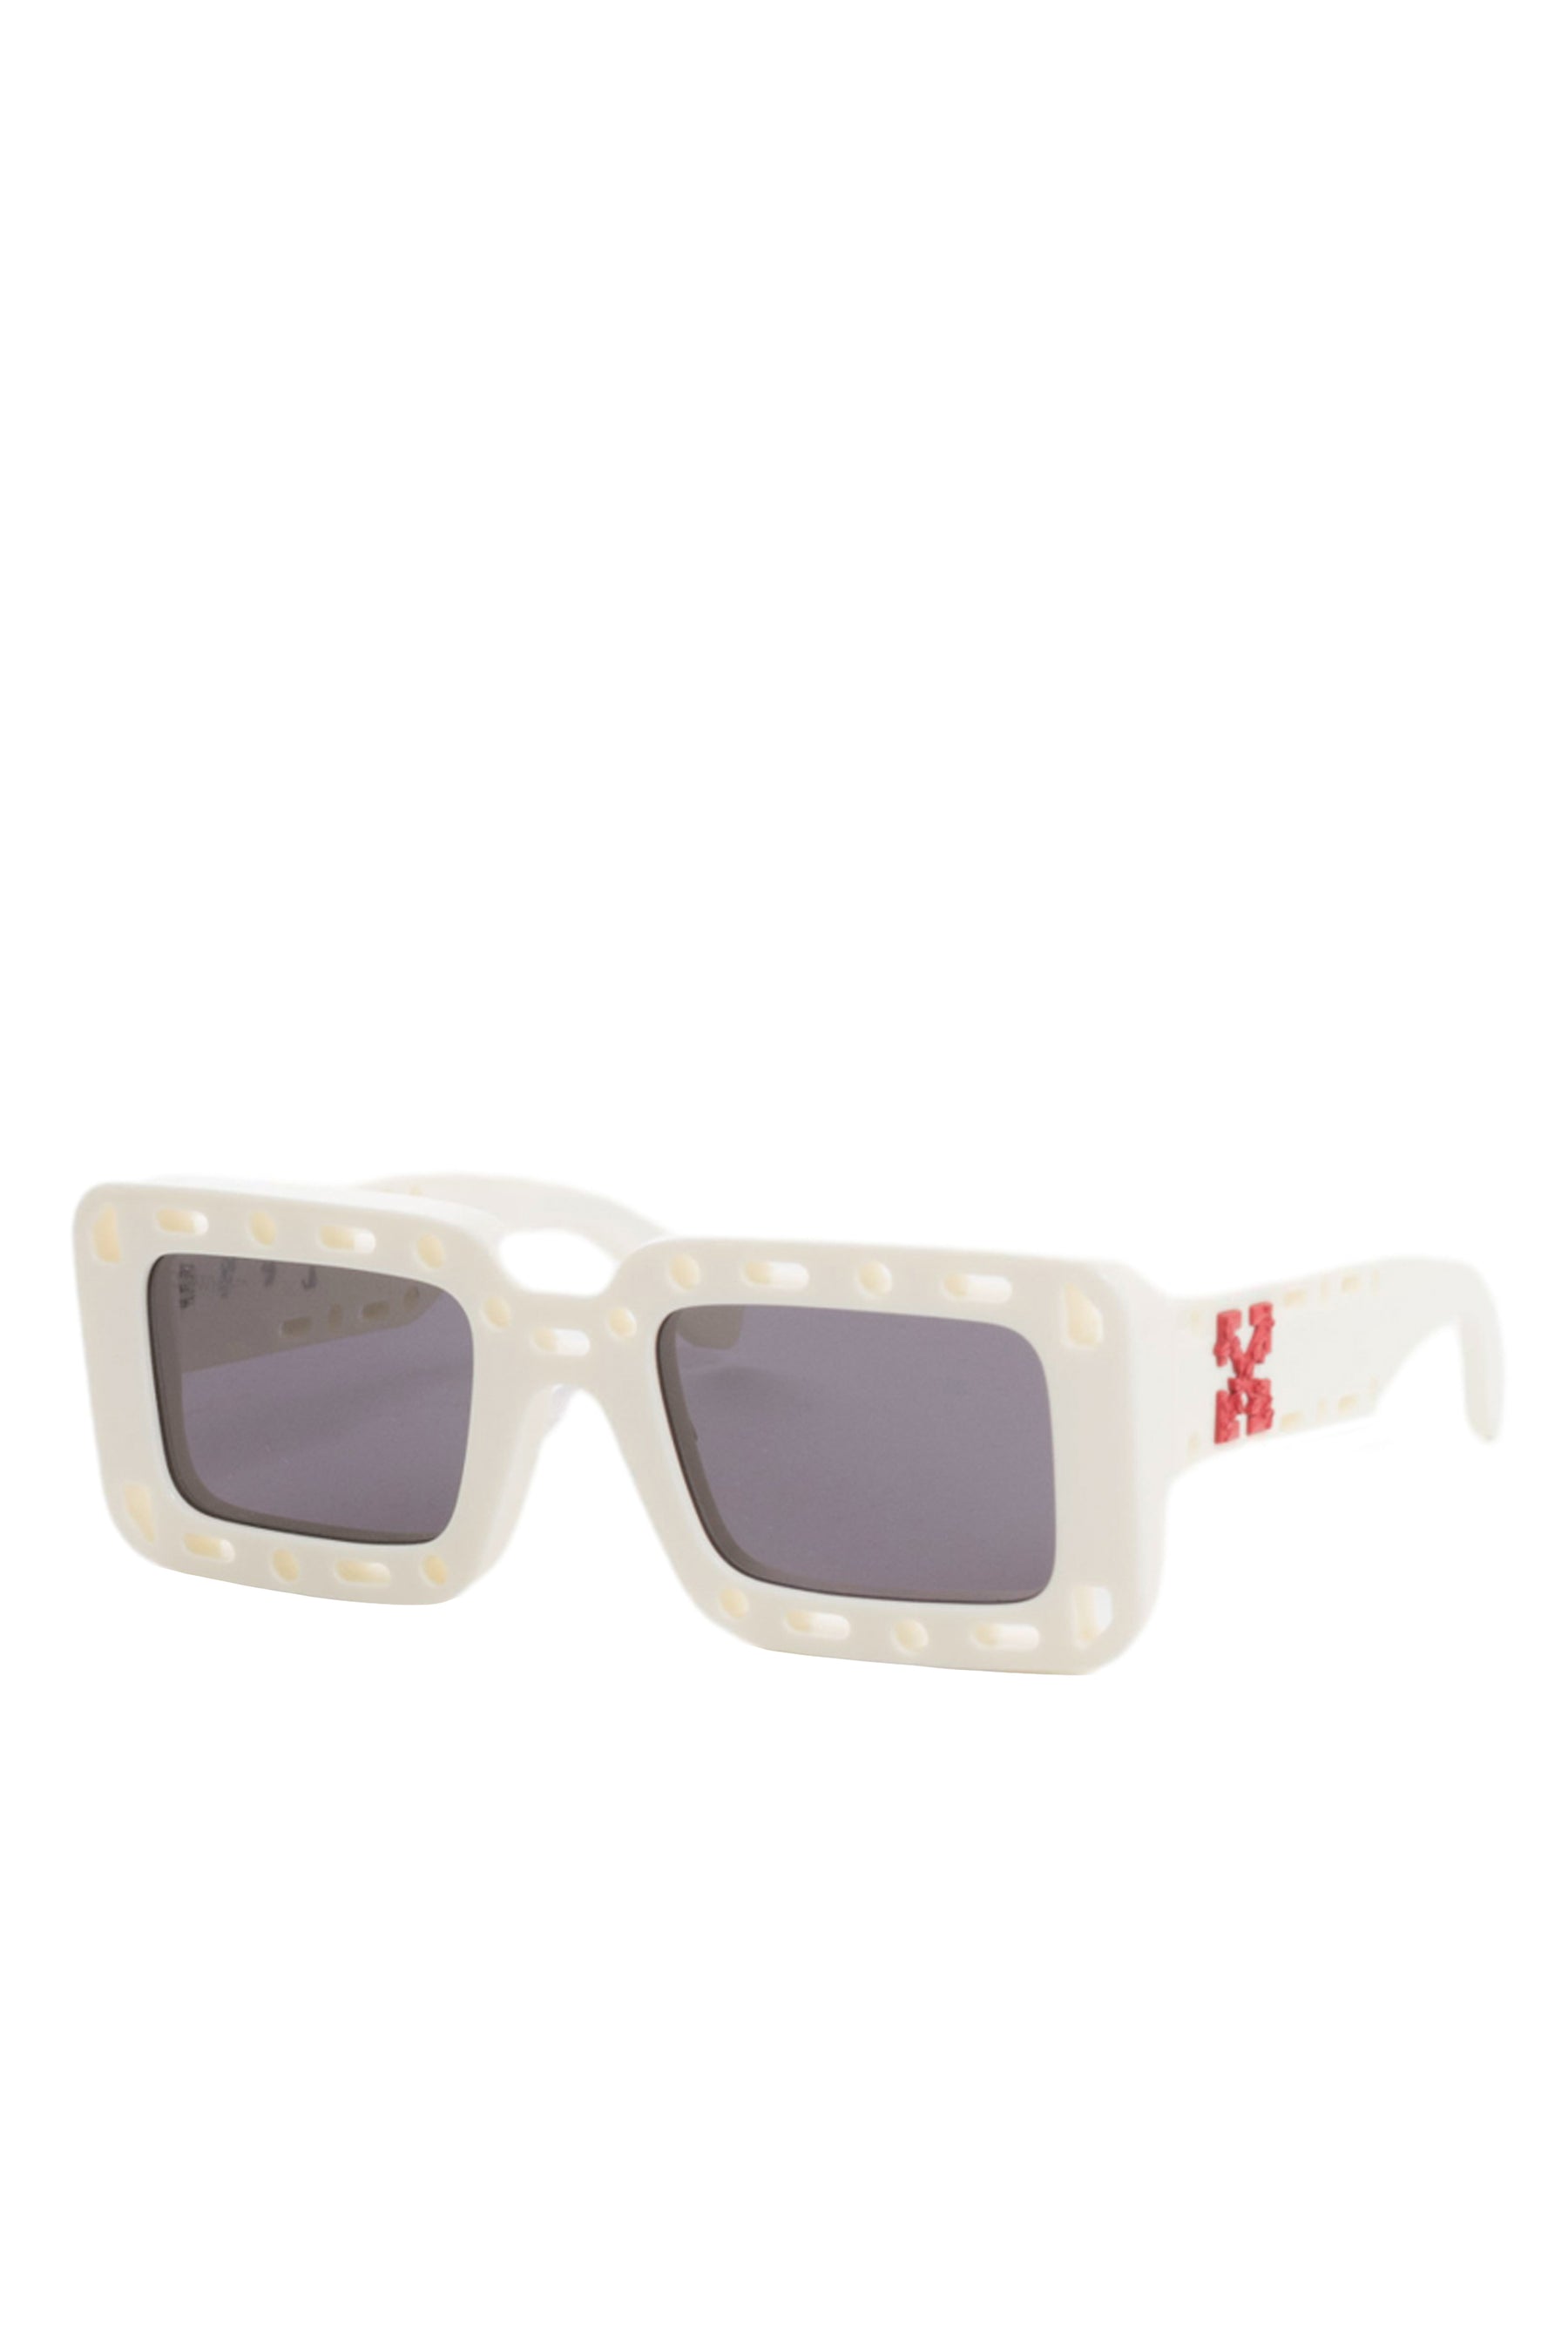 off white sunglasses holes